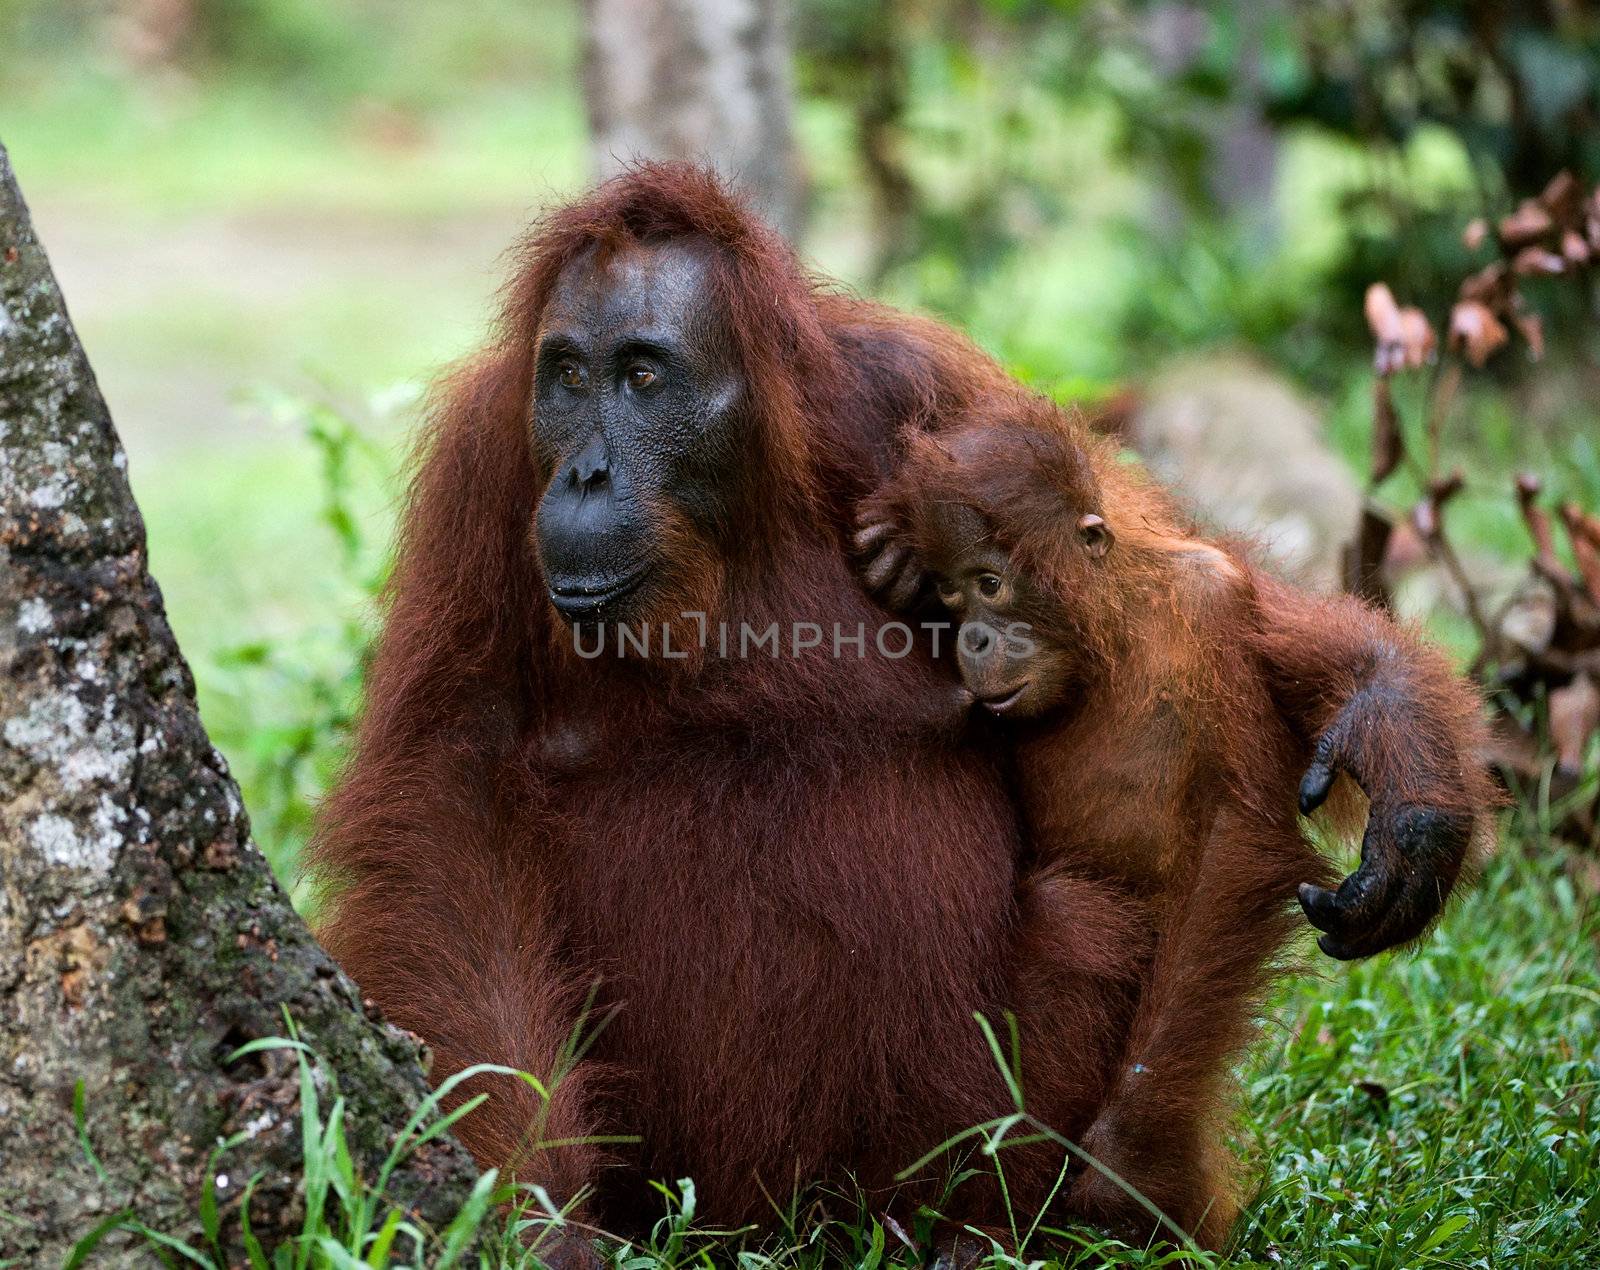 The orangutan Mum with a cub by SURZ